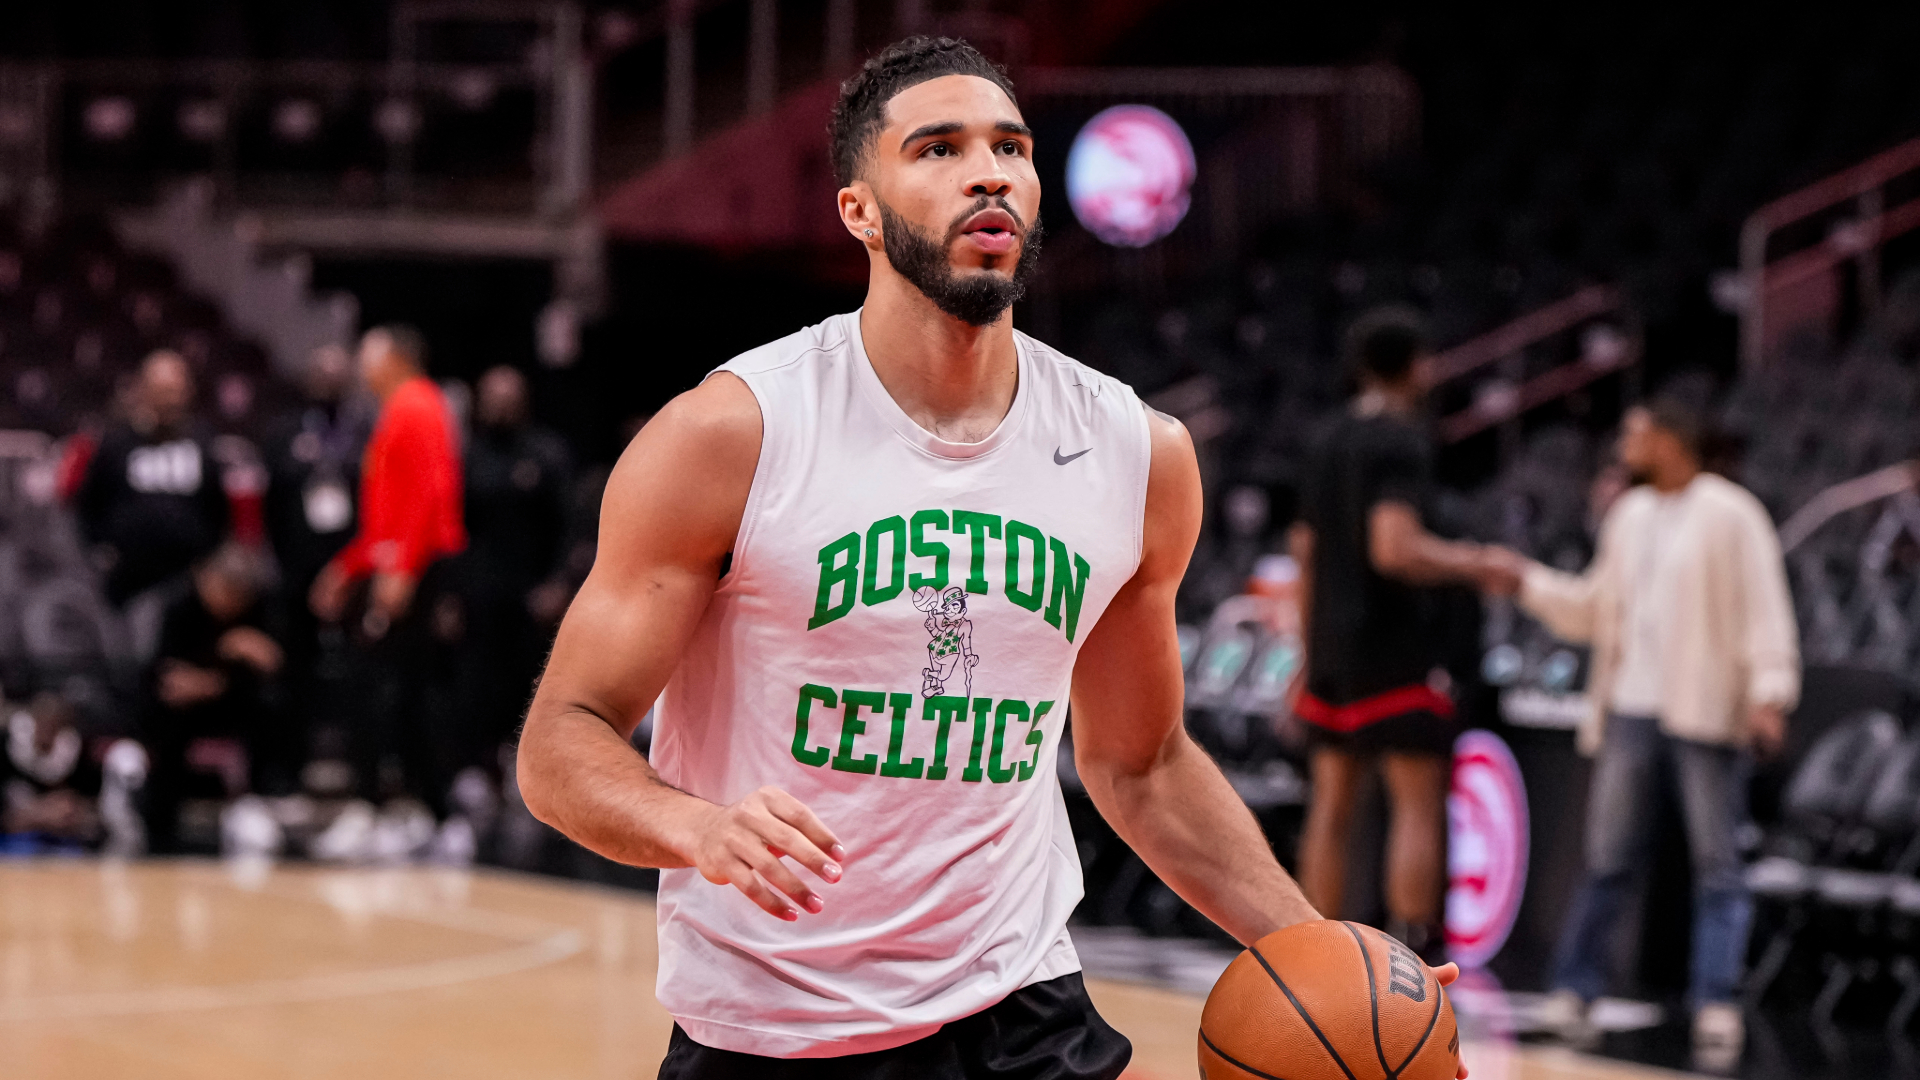 Celtics’ Jayson Tatum Sympathizes With Sports Bettors: ‘I Do Feel
Bad’